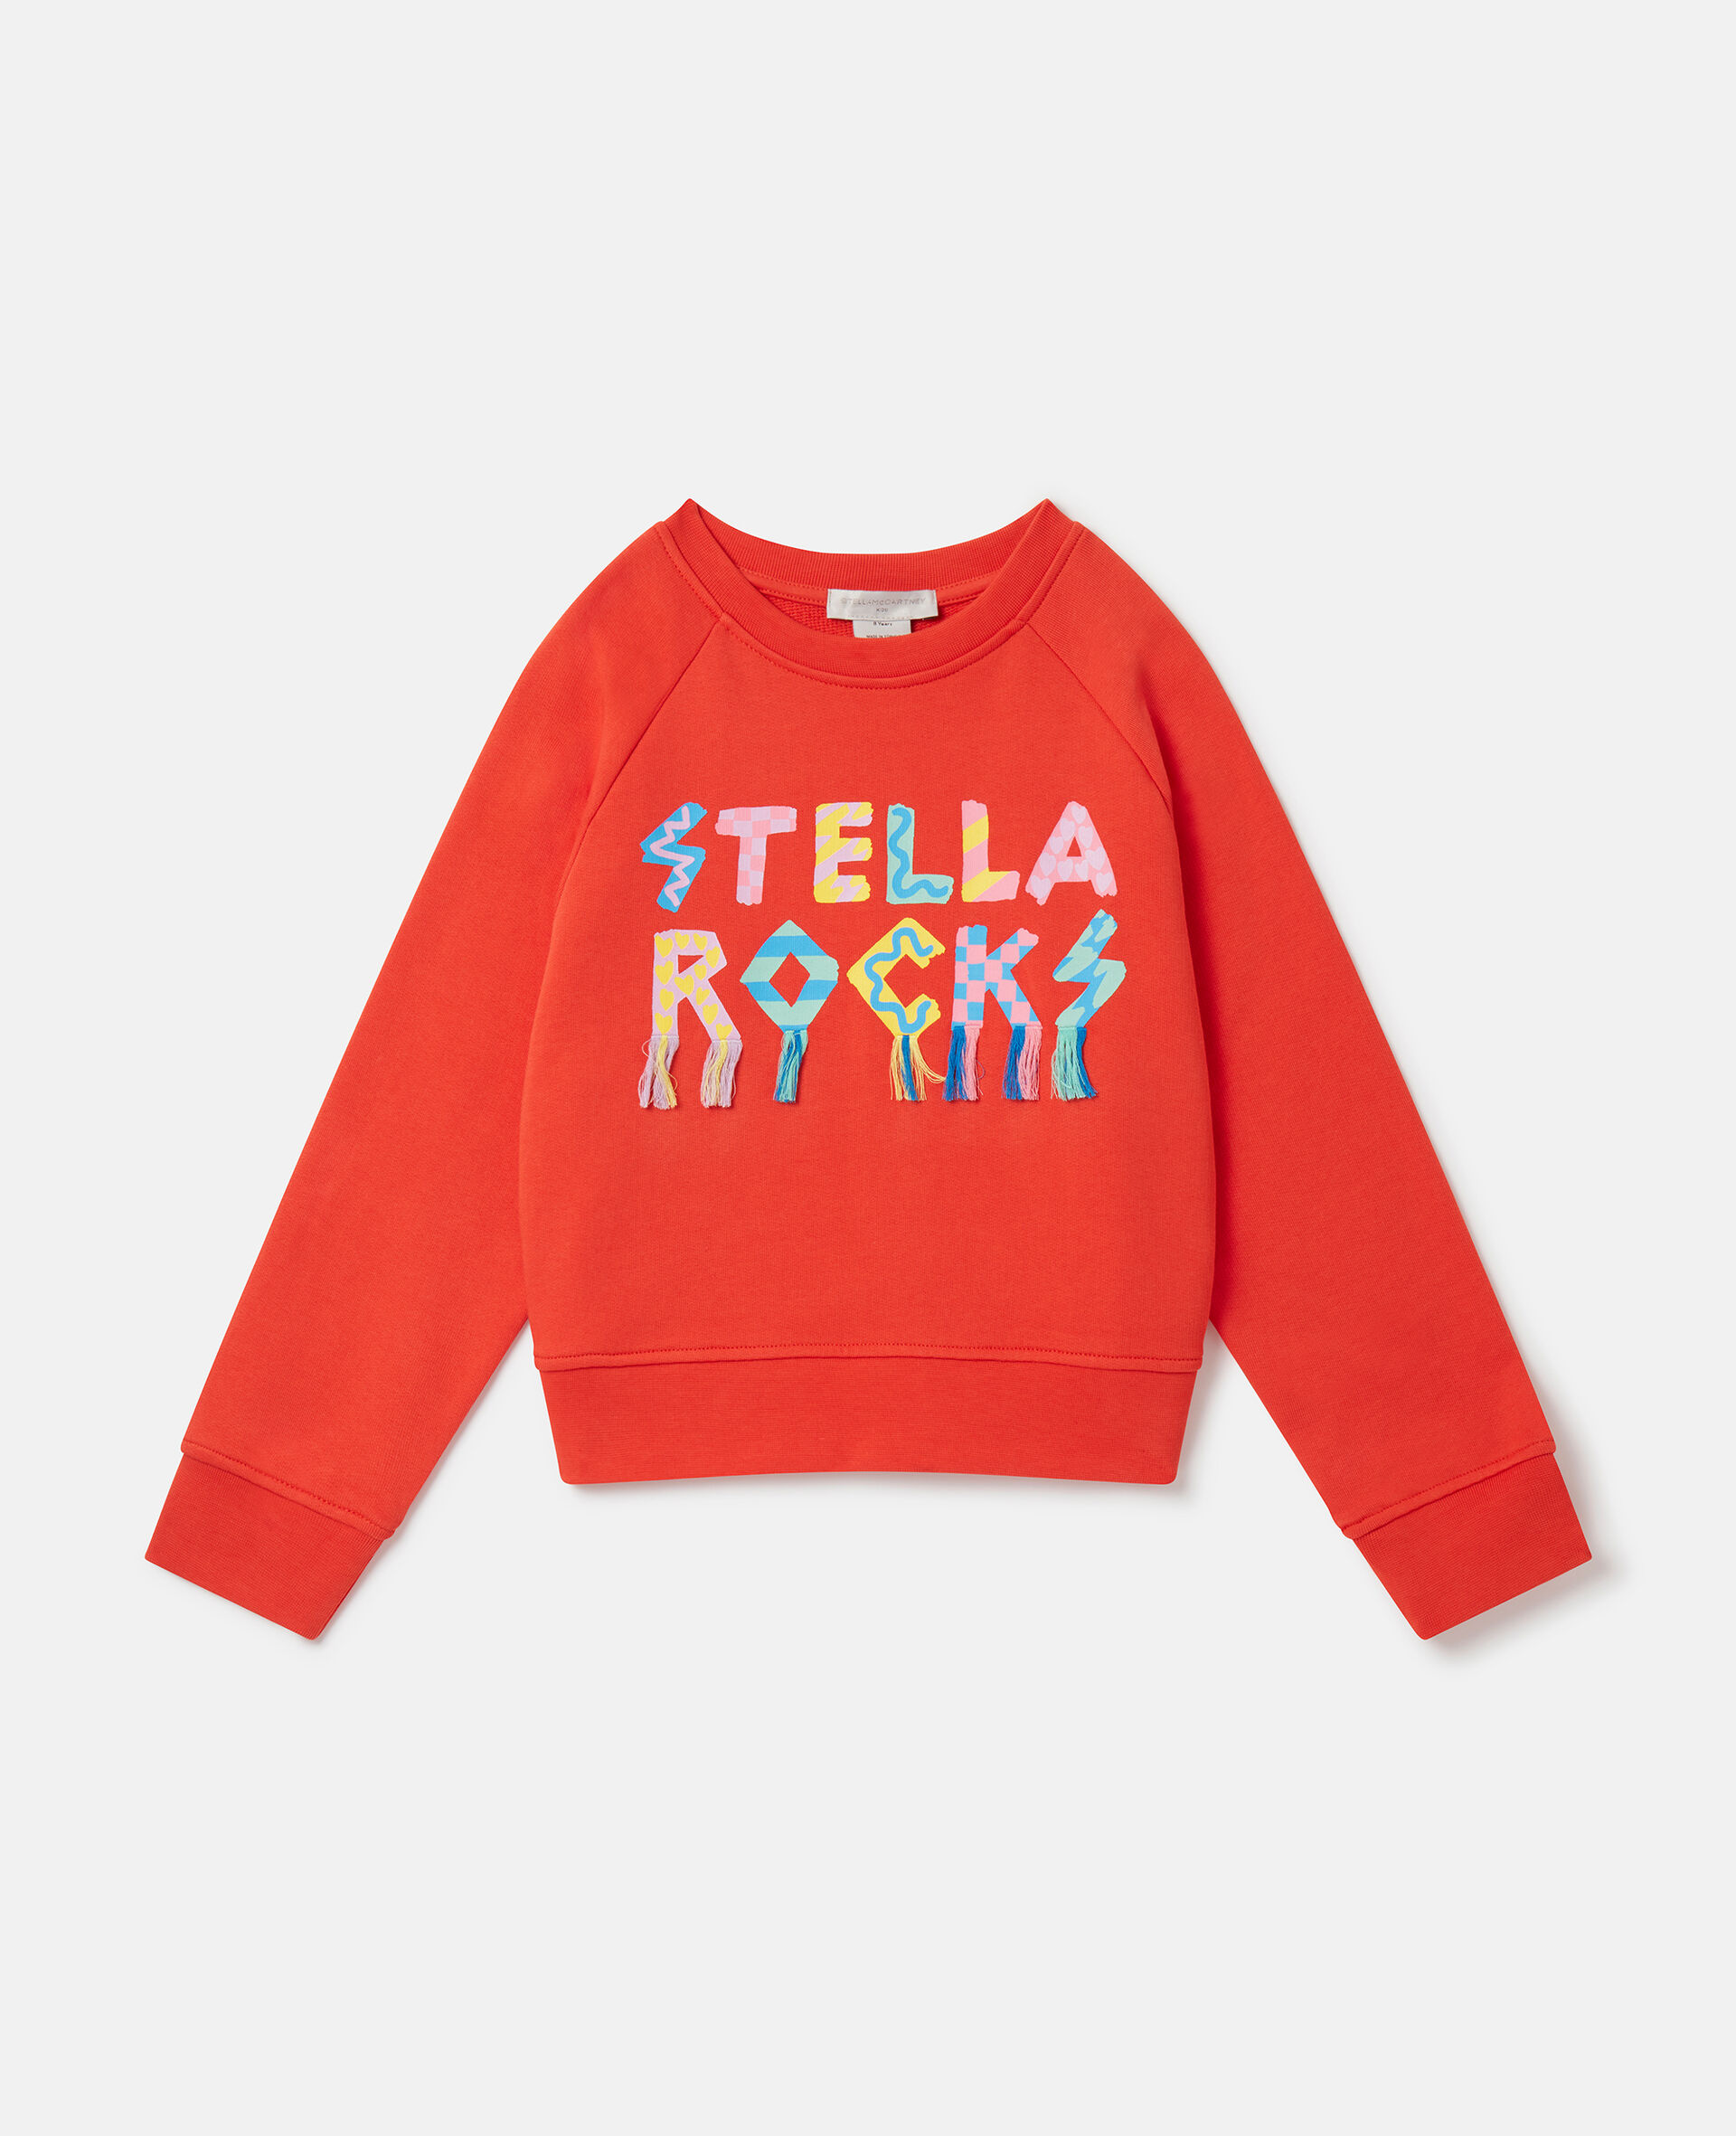 Stella Rocks Sweatshirt-Red-medium